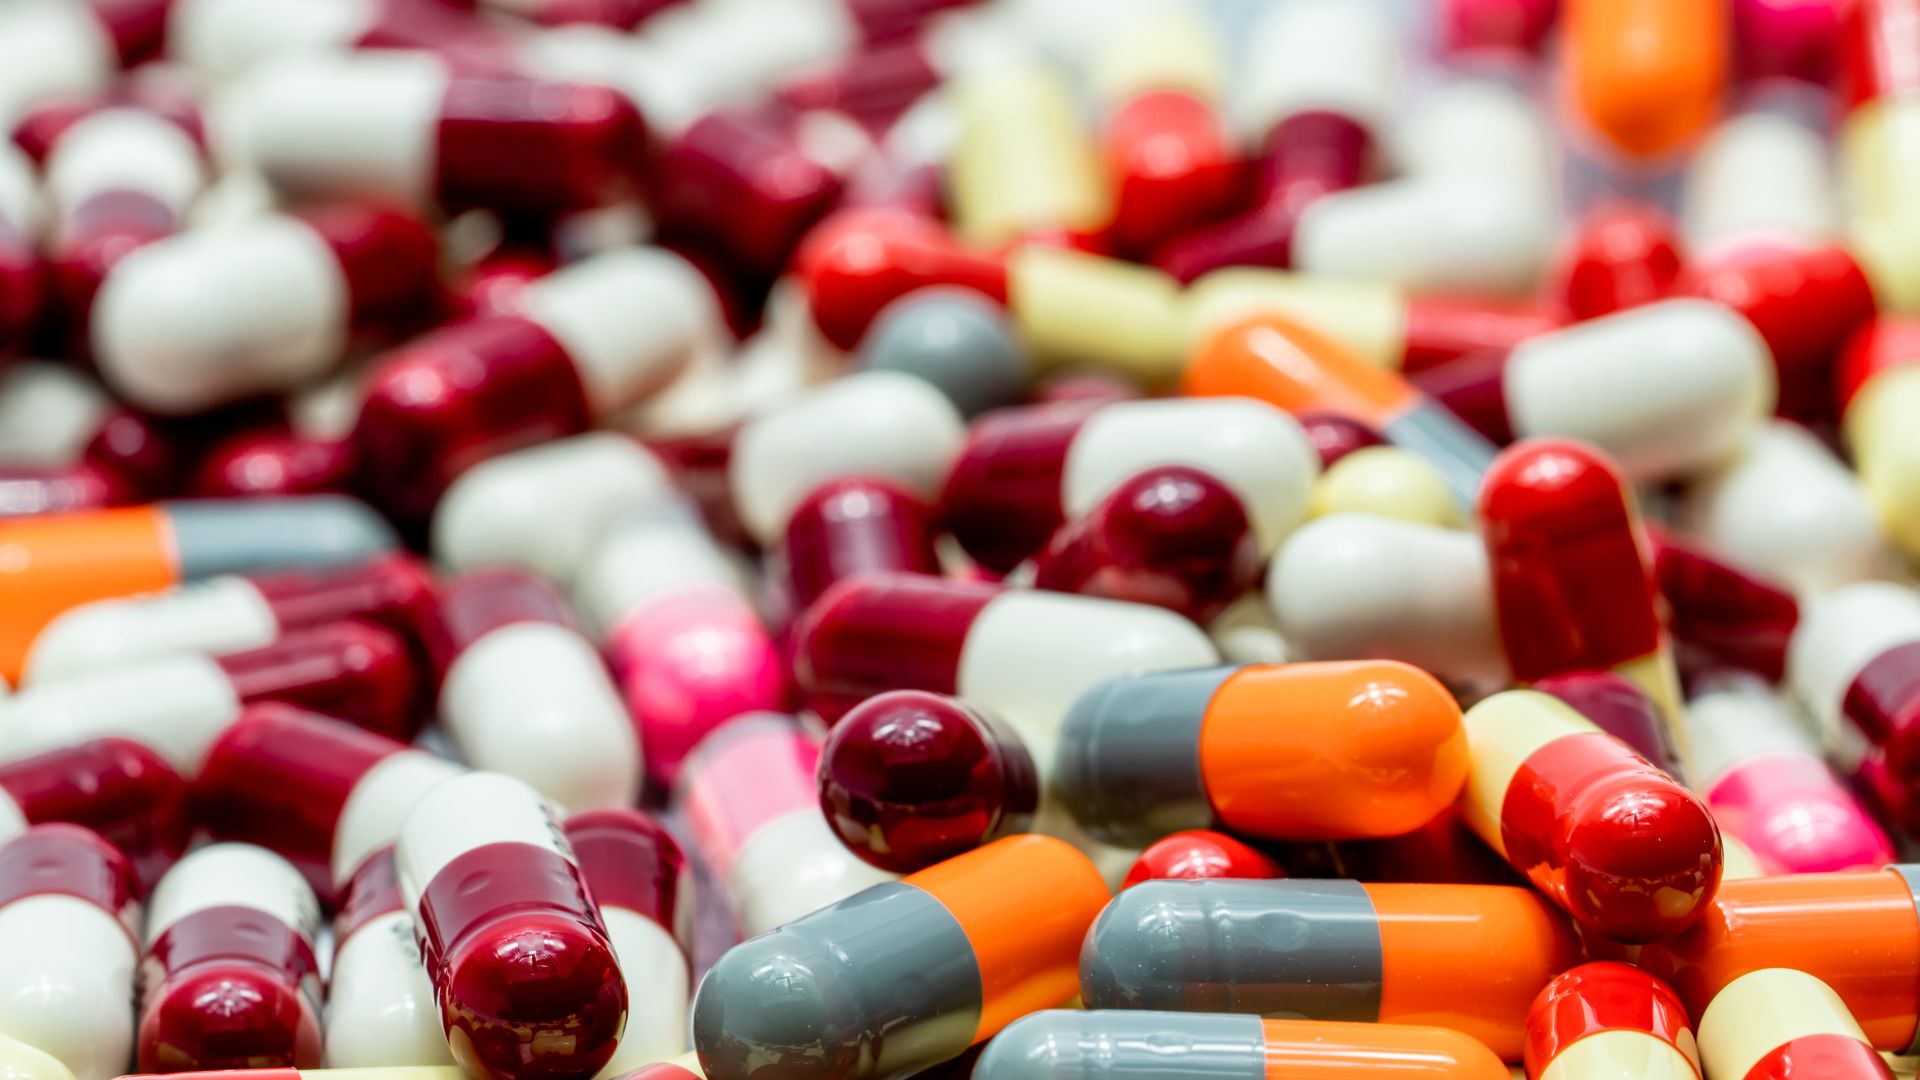 How Can We Combat Antibiotic Resistance